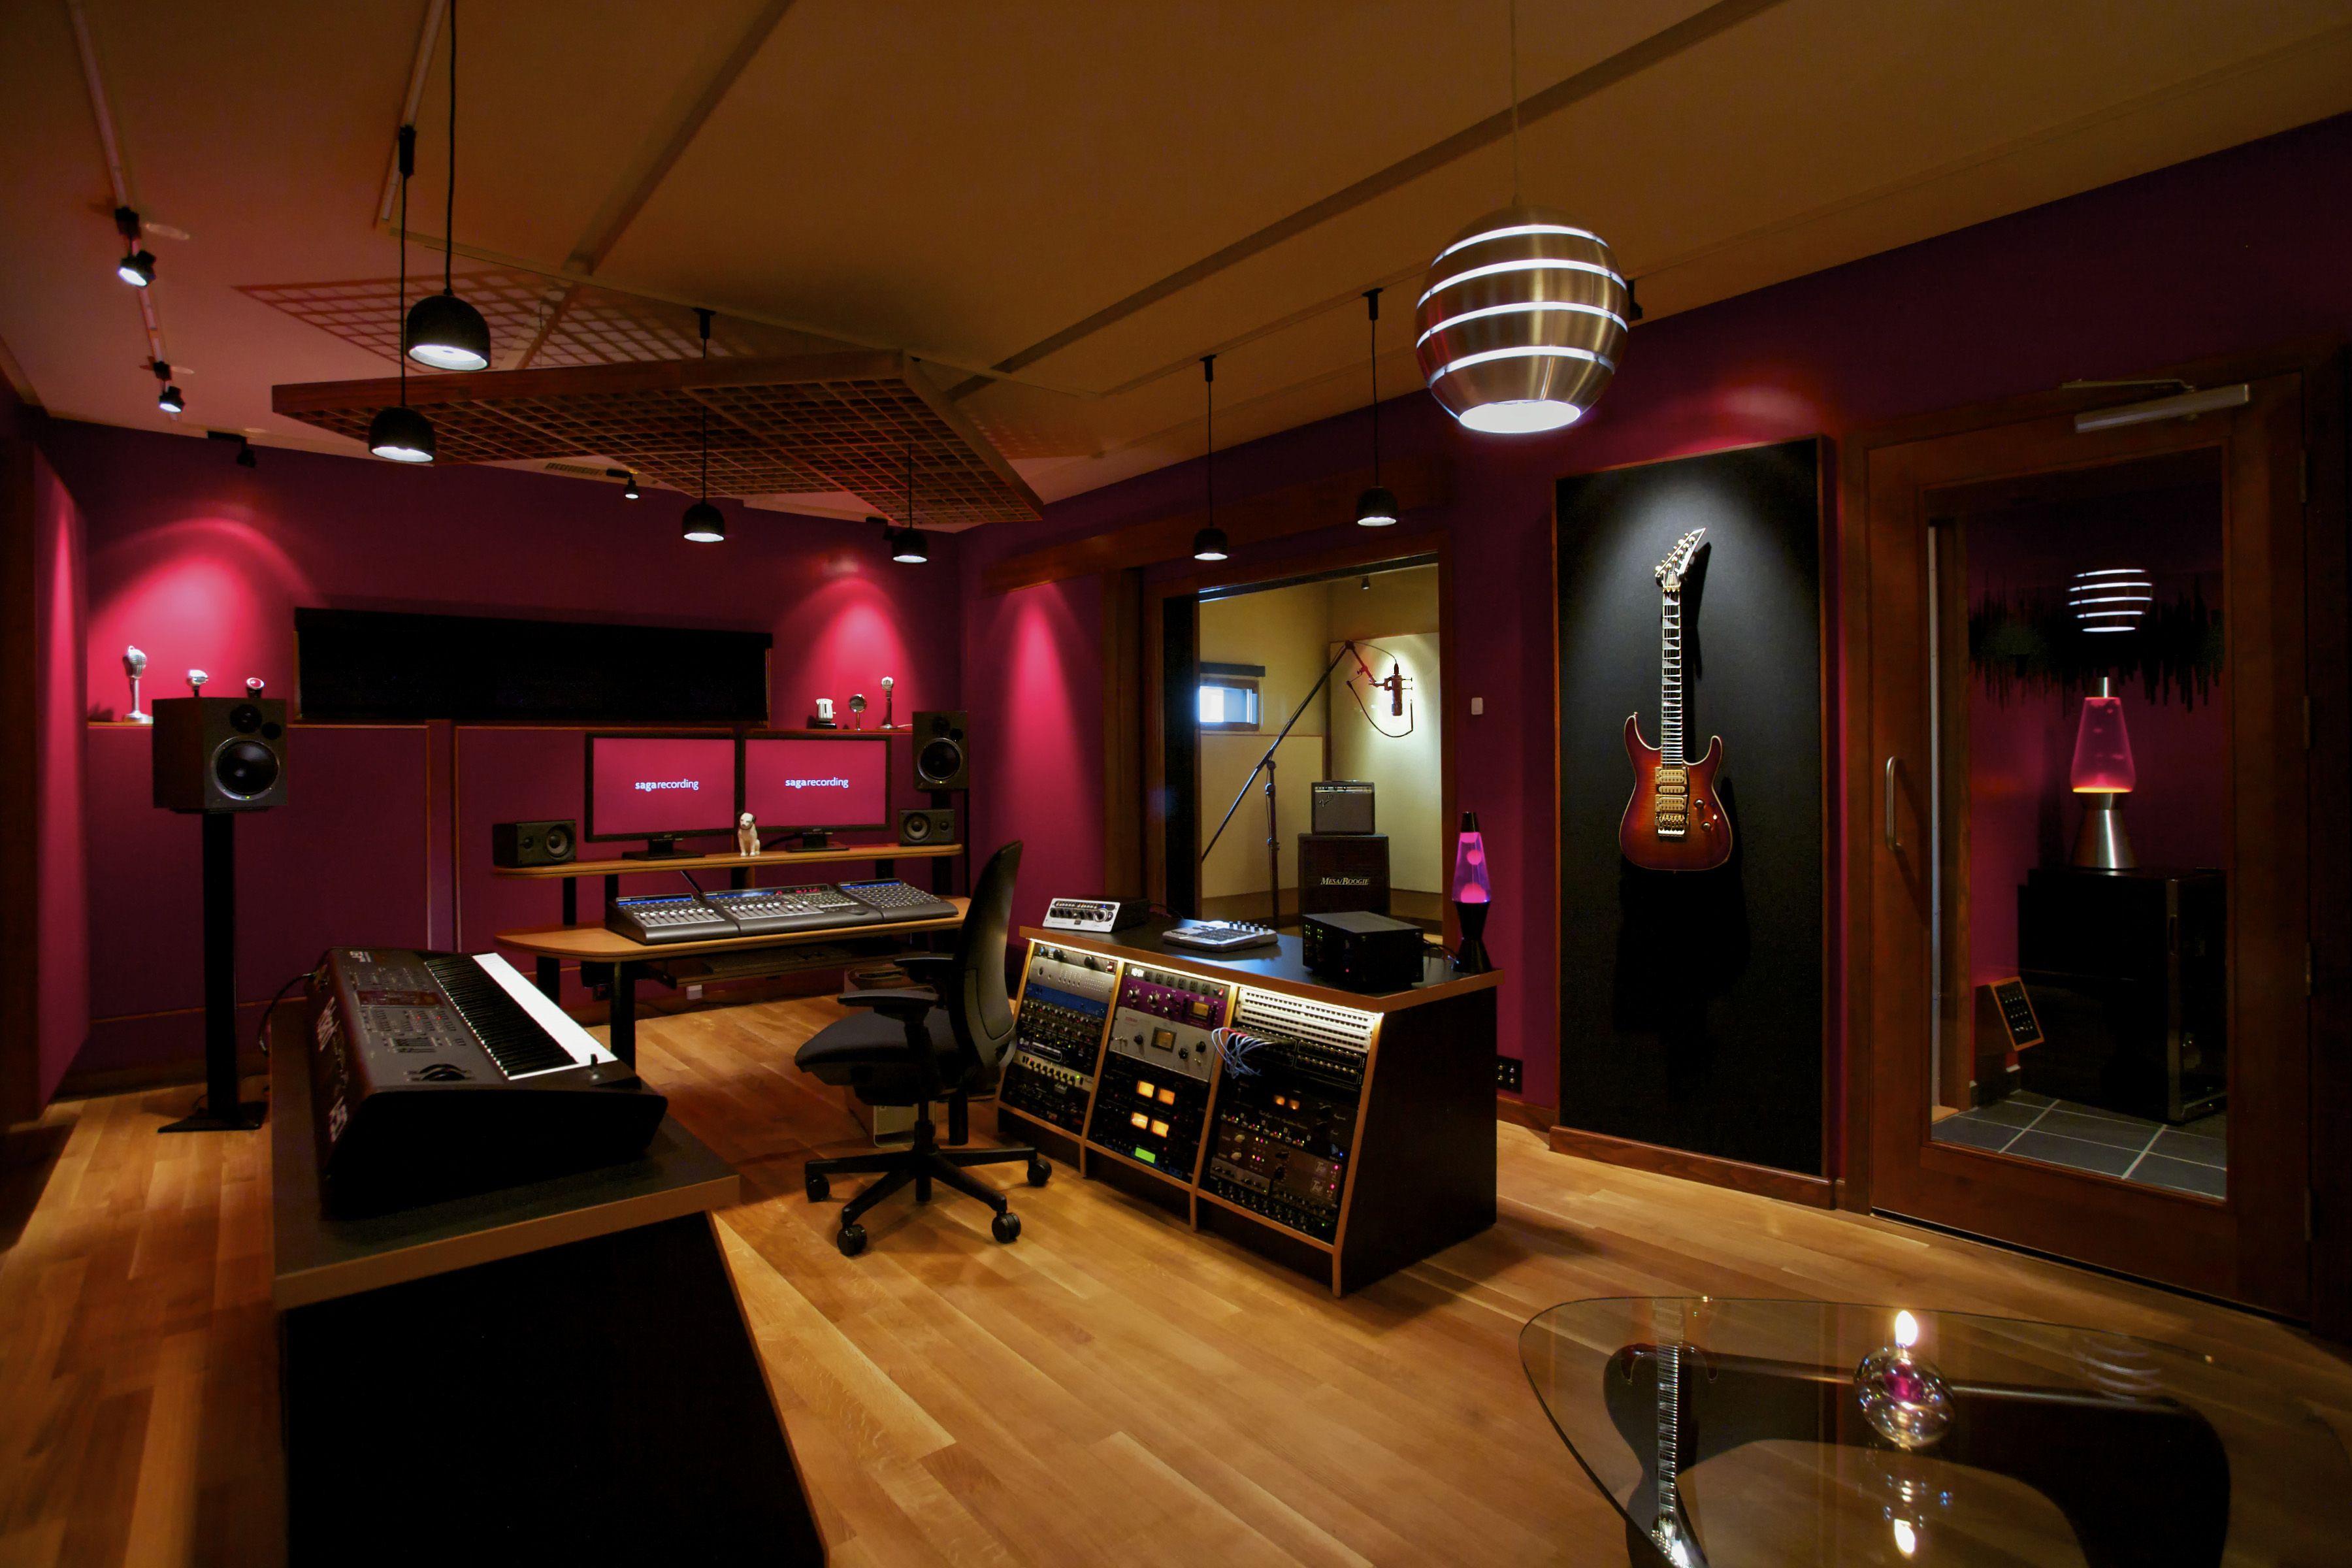 Recording Studio Images - Free Download on Freepik